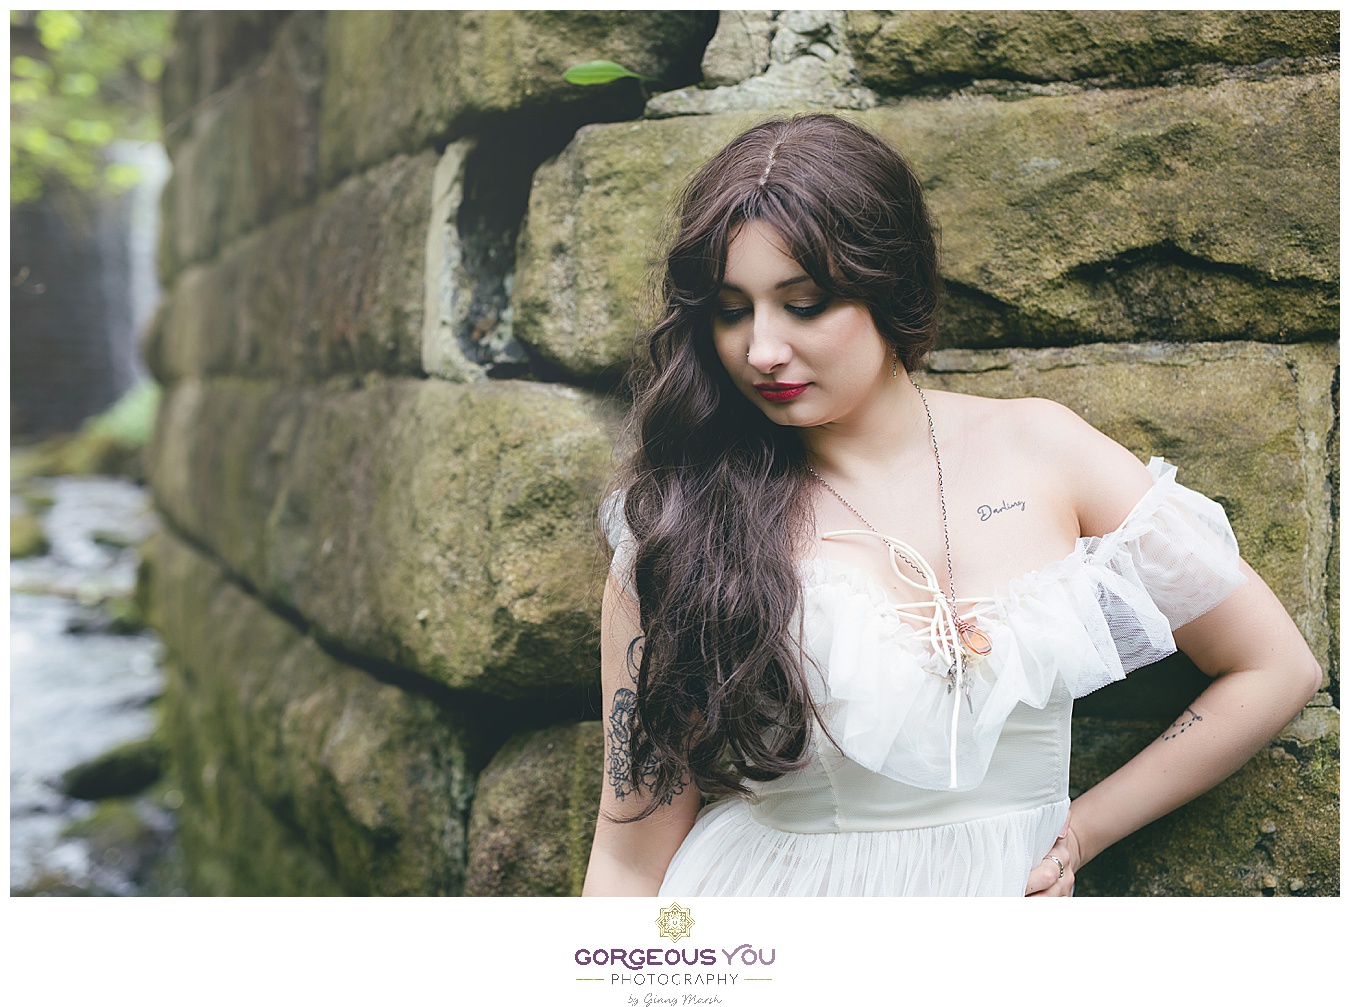 Feminine white tulle dress leaning against a stone wall | Divine feminine goddess boudoir photoshoot | Gorgeous You Photography | North Yorkshire